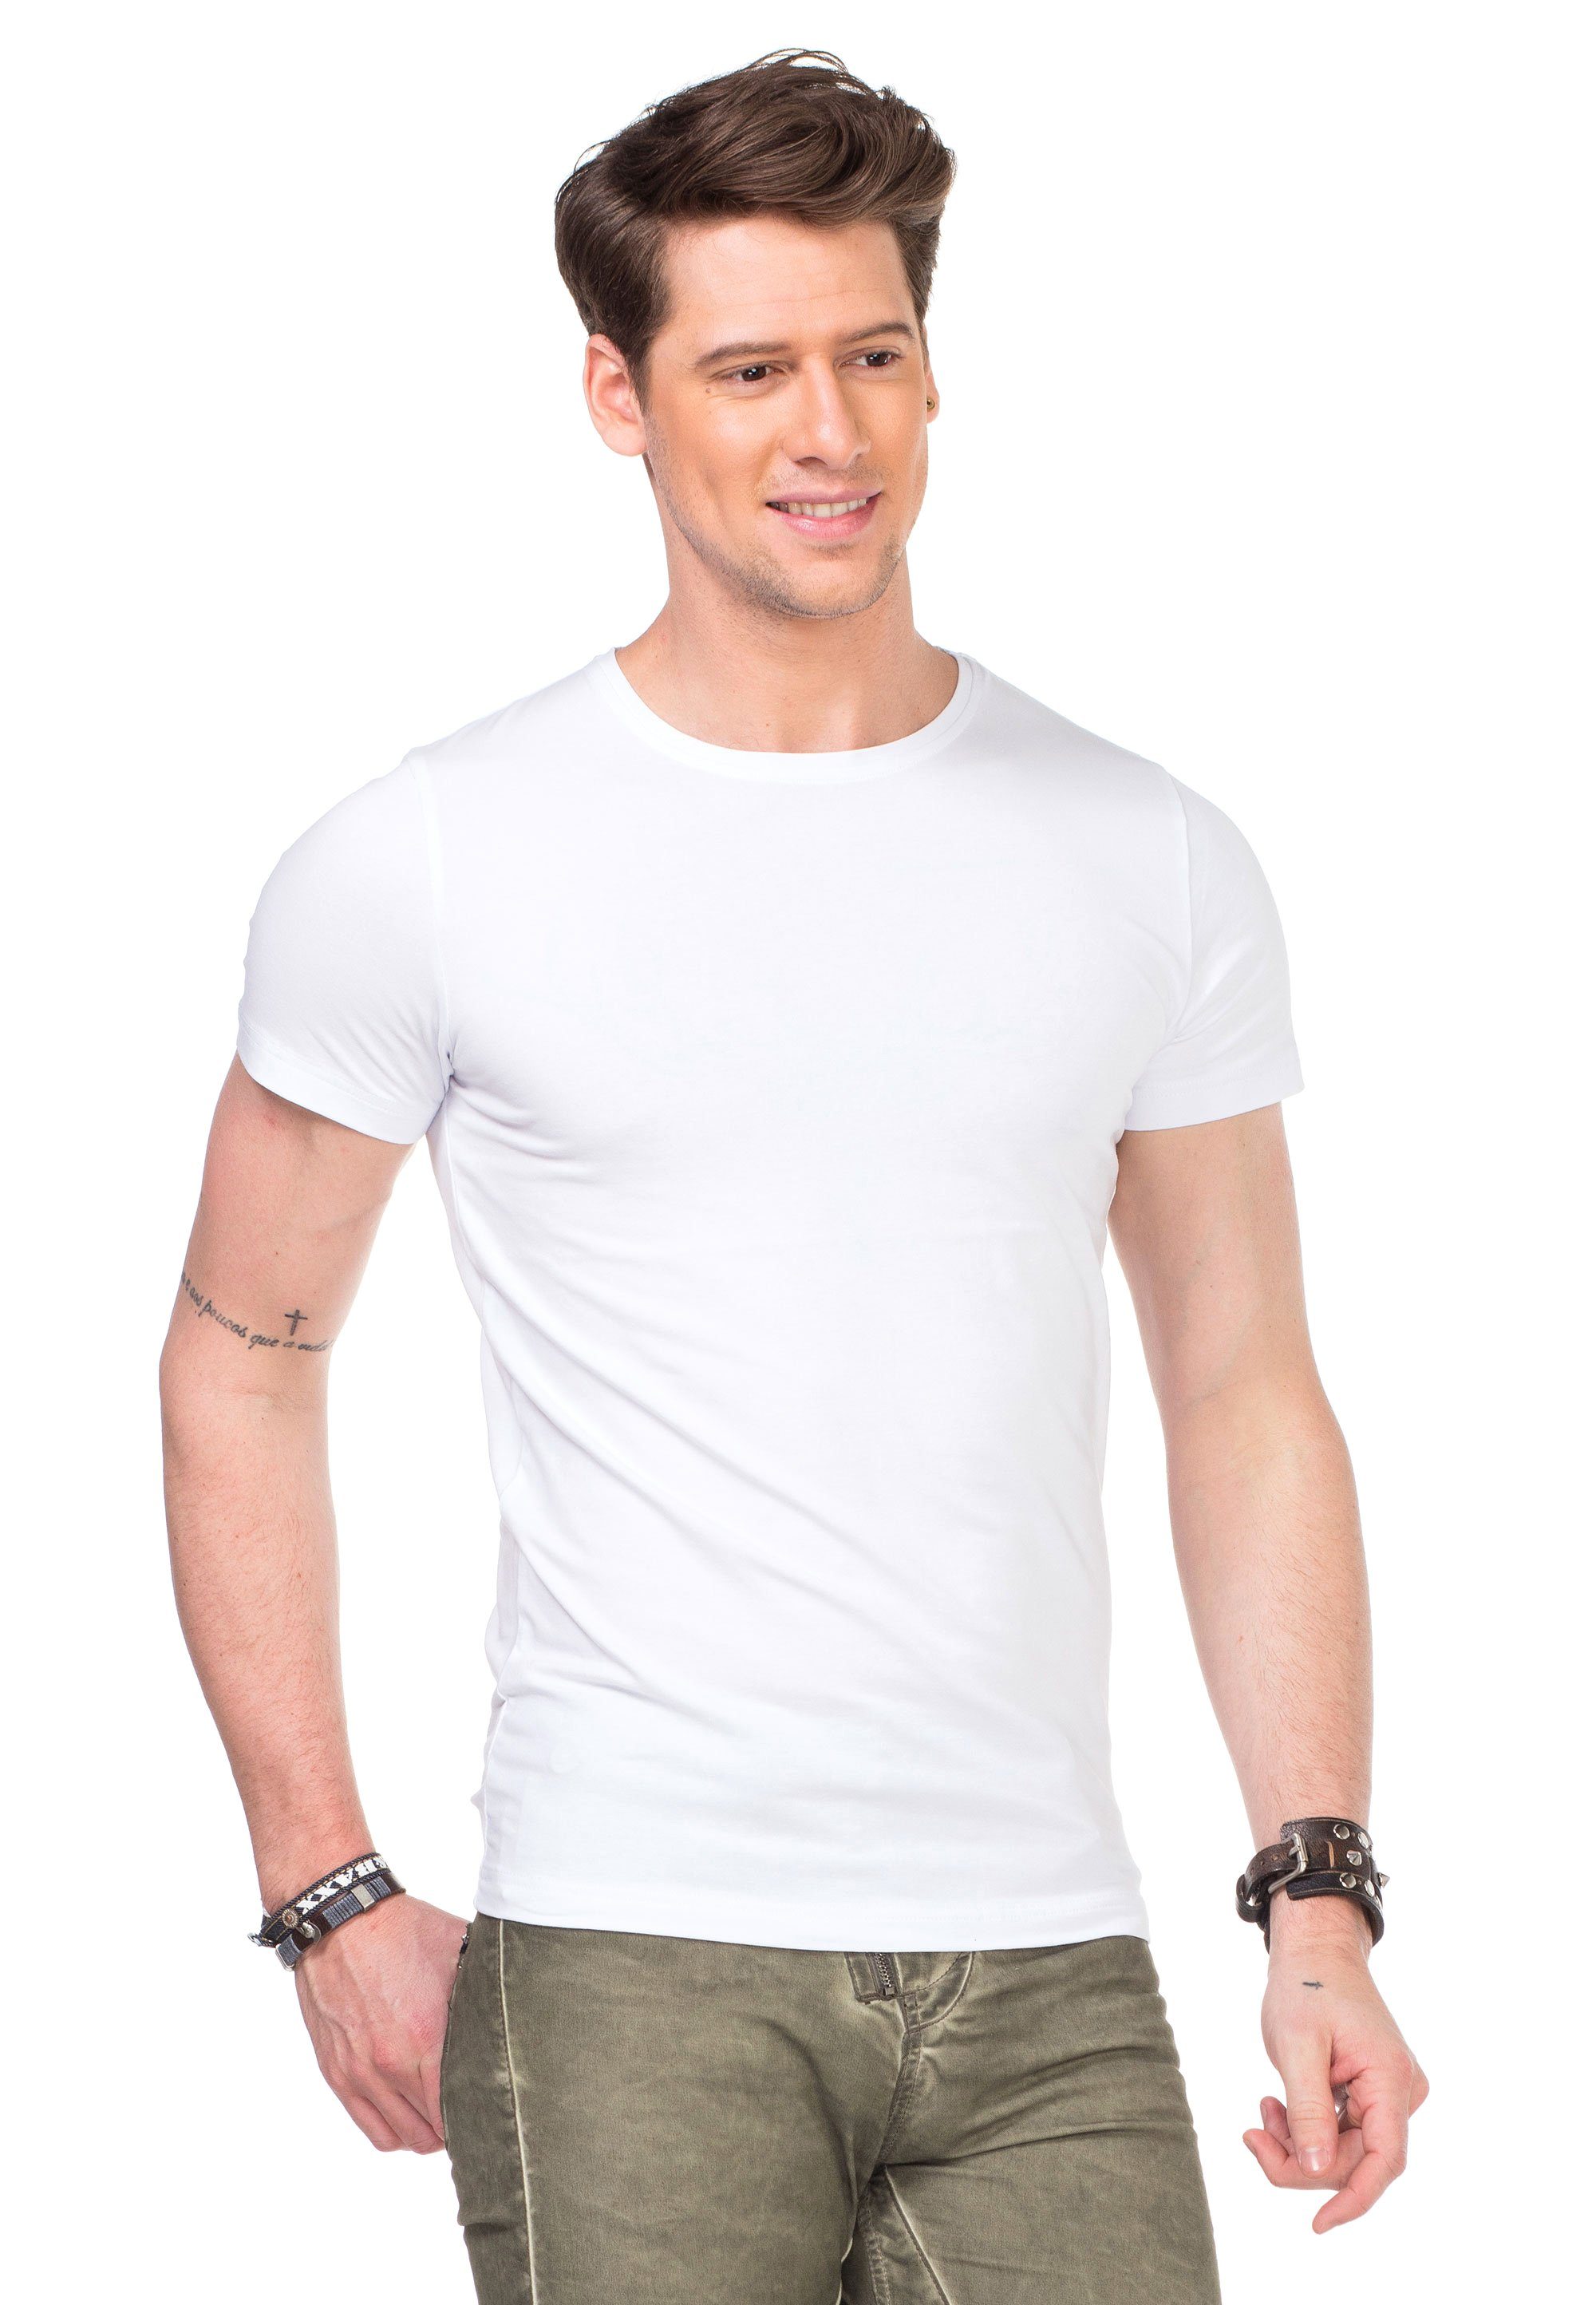 Rundhalsausschnitt Cipo T-Shirt weiß & modernem Baxx mit